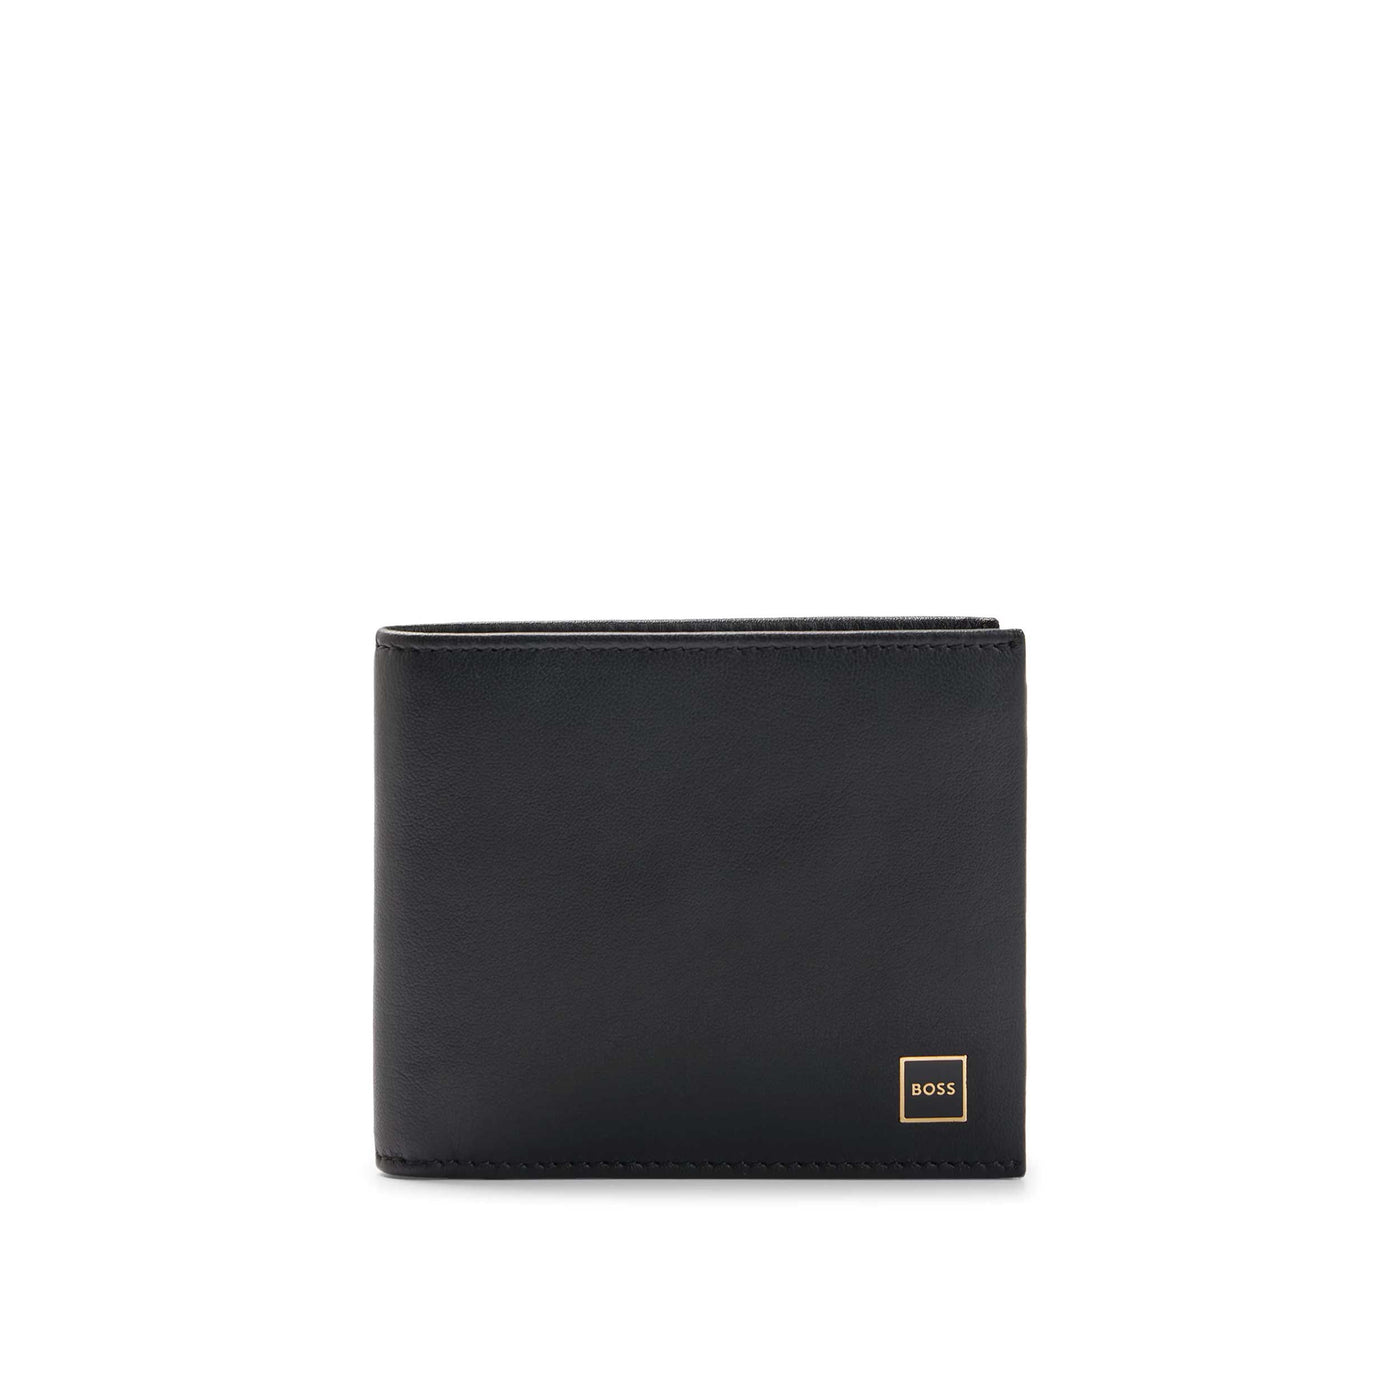 BOSS Holiday GLB 8 cc Wallet in Black 